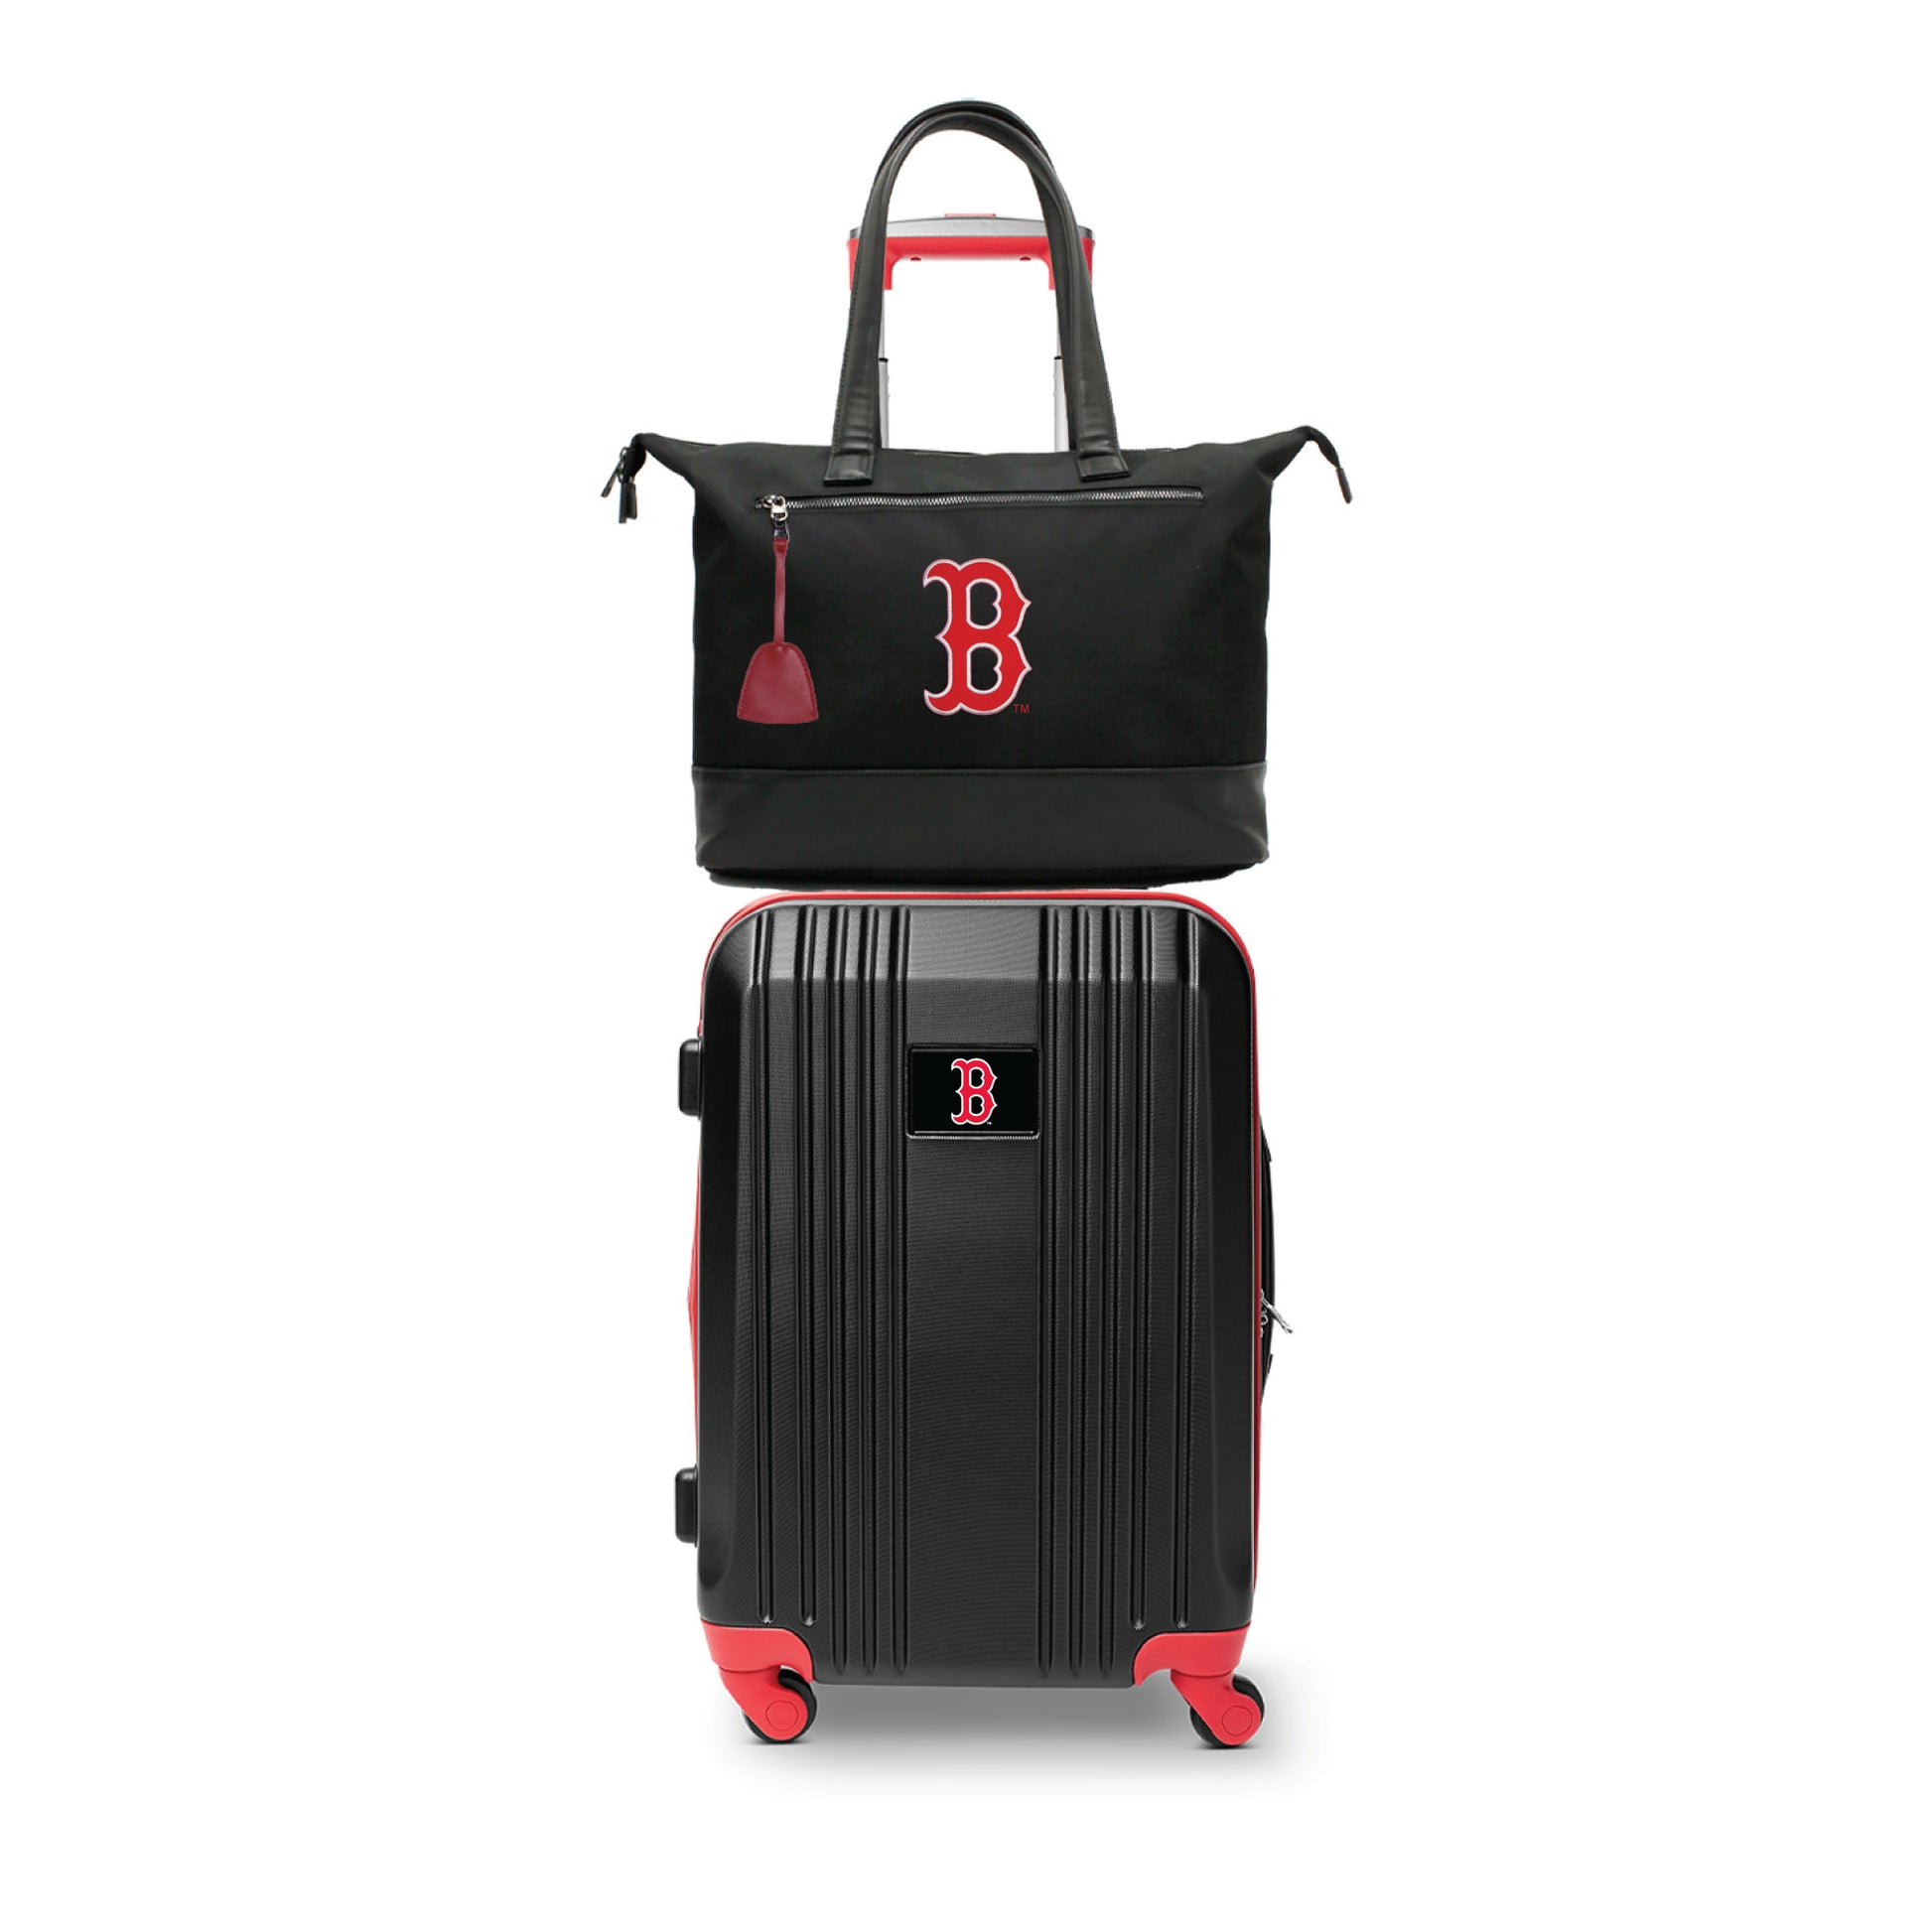 Boston Red Sox Premium Laptop Tote Bag and Luggage Set